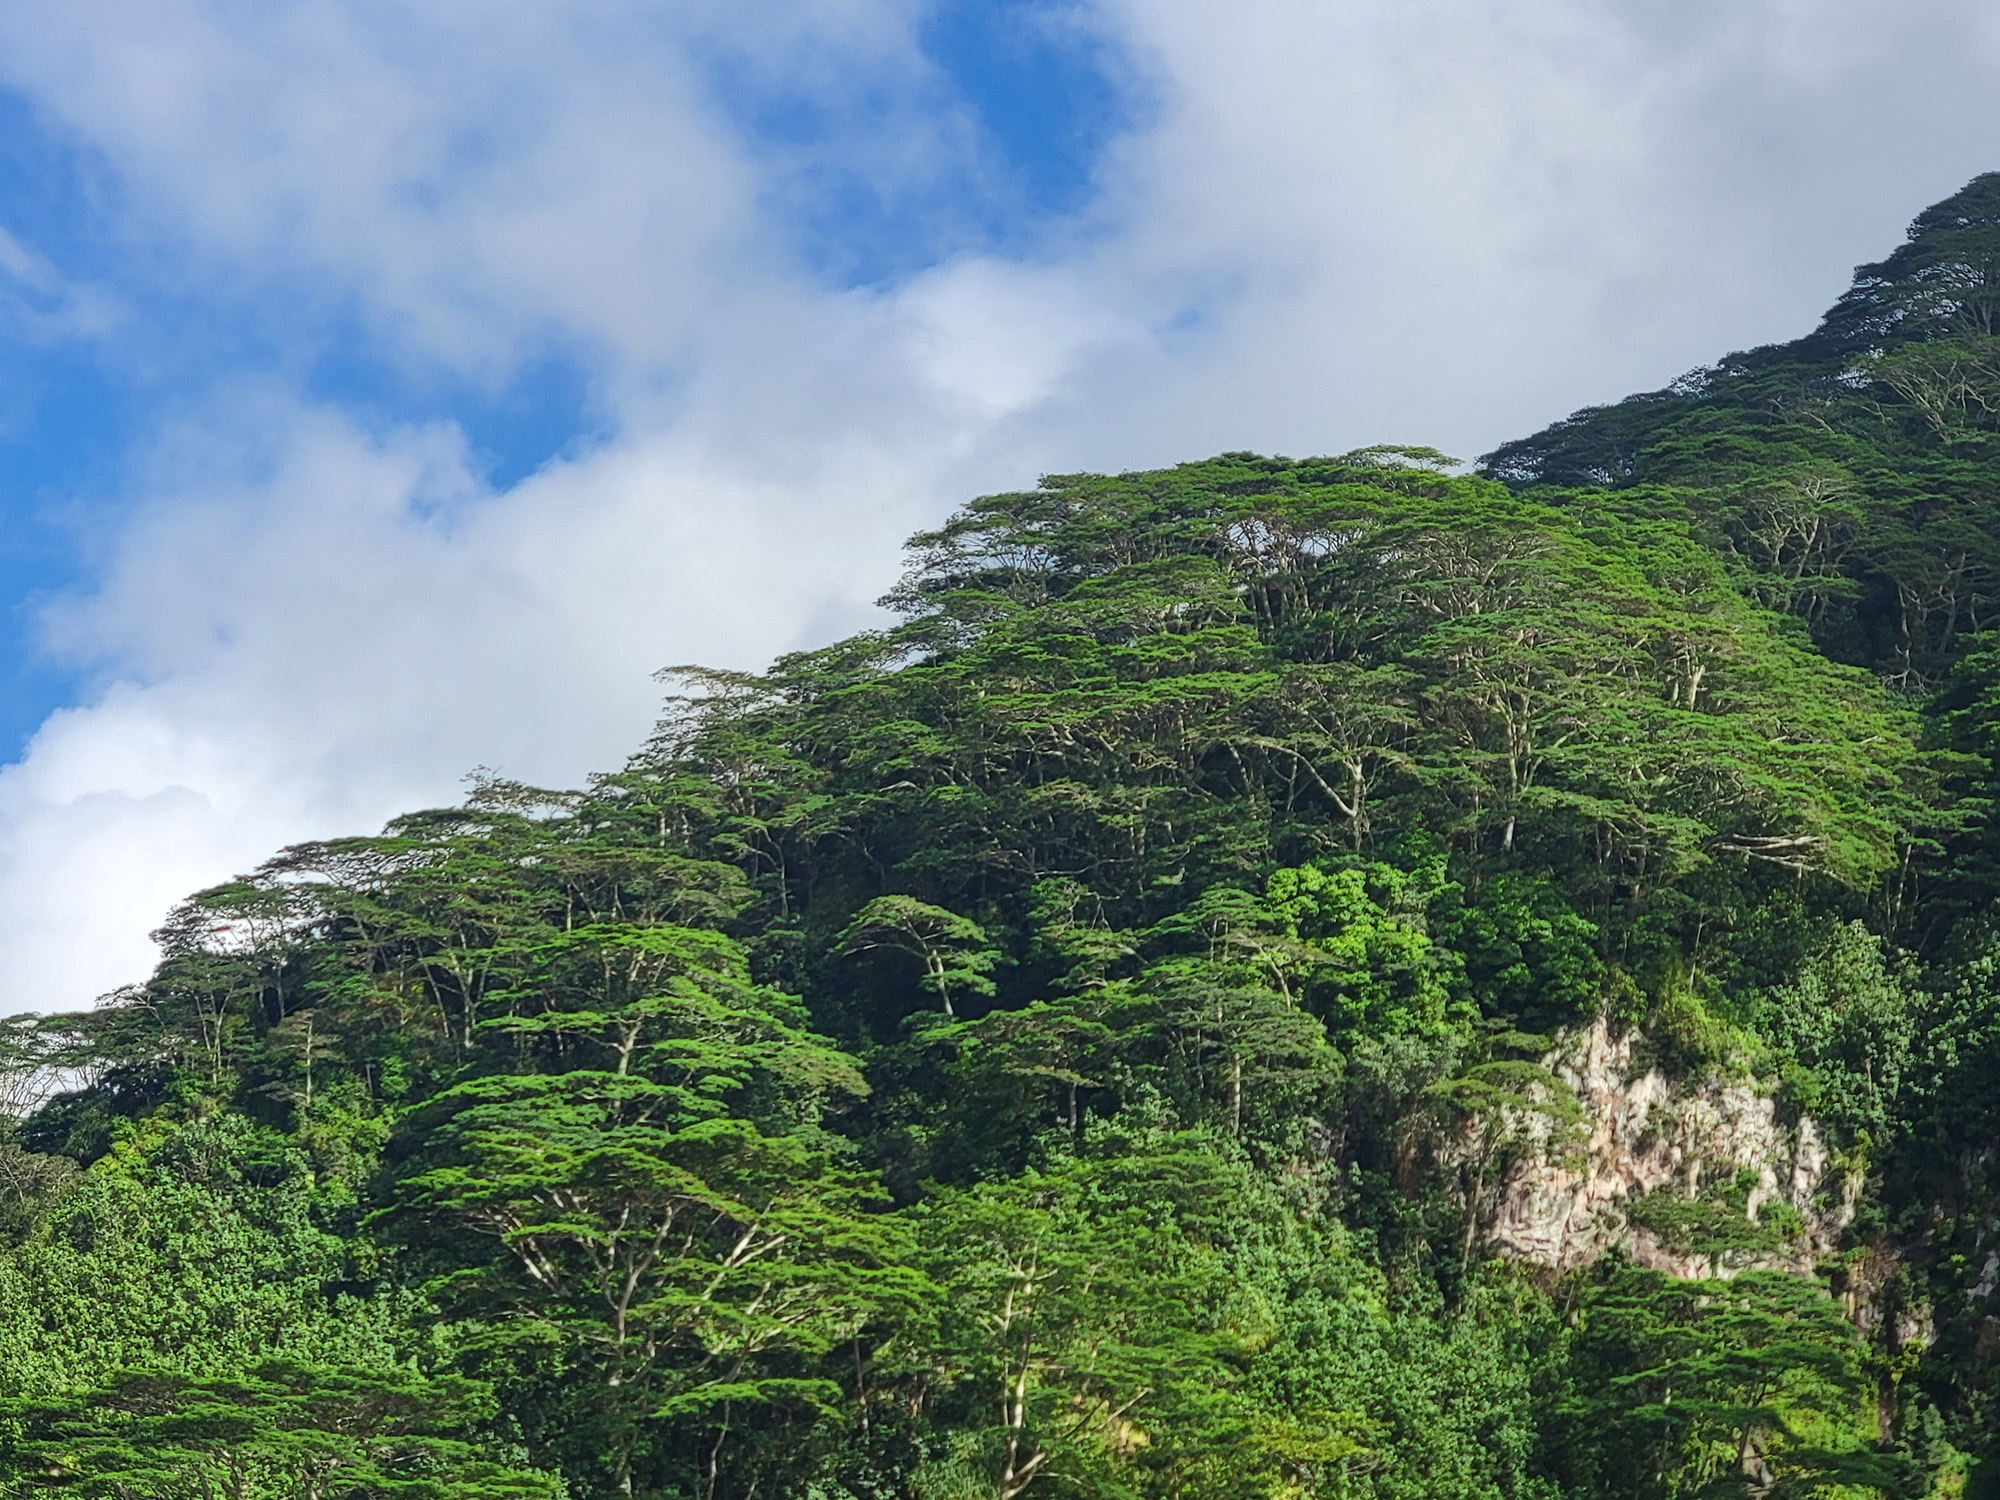 Falcata trees against a blue sky with clouds, on a Nuku Hiva hillside, evocative of the Falcata Group logo.